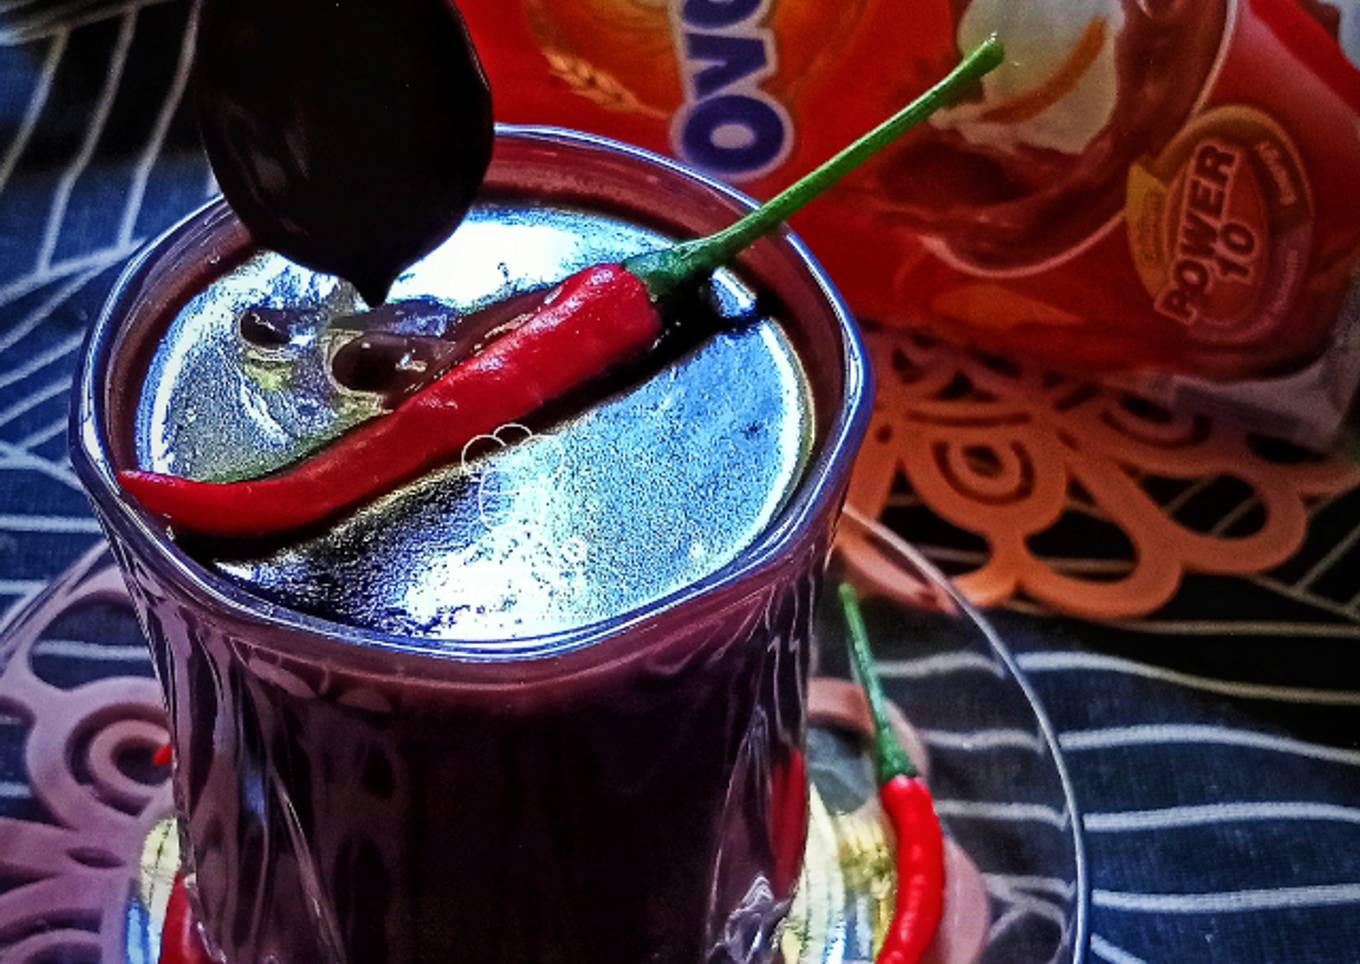 Resepi Chili chocolate sauce Ovaltine 🇲🇽 yang Enak dan Ringkas